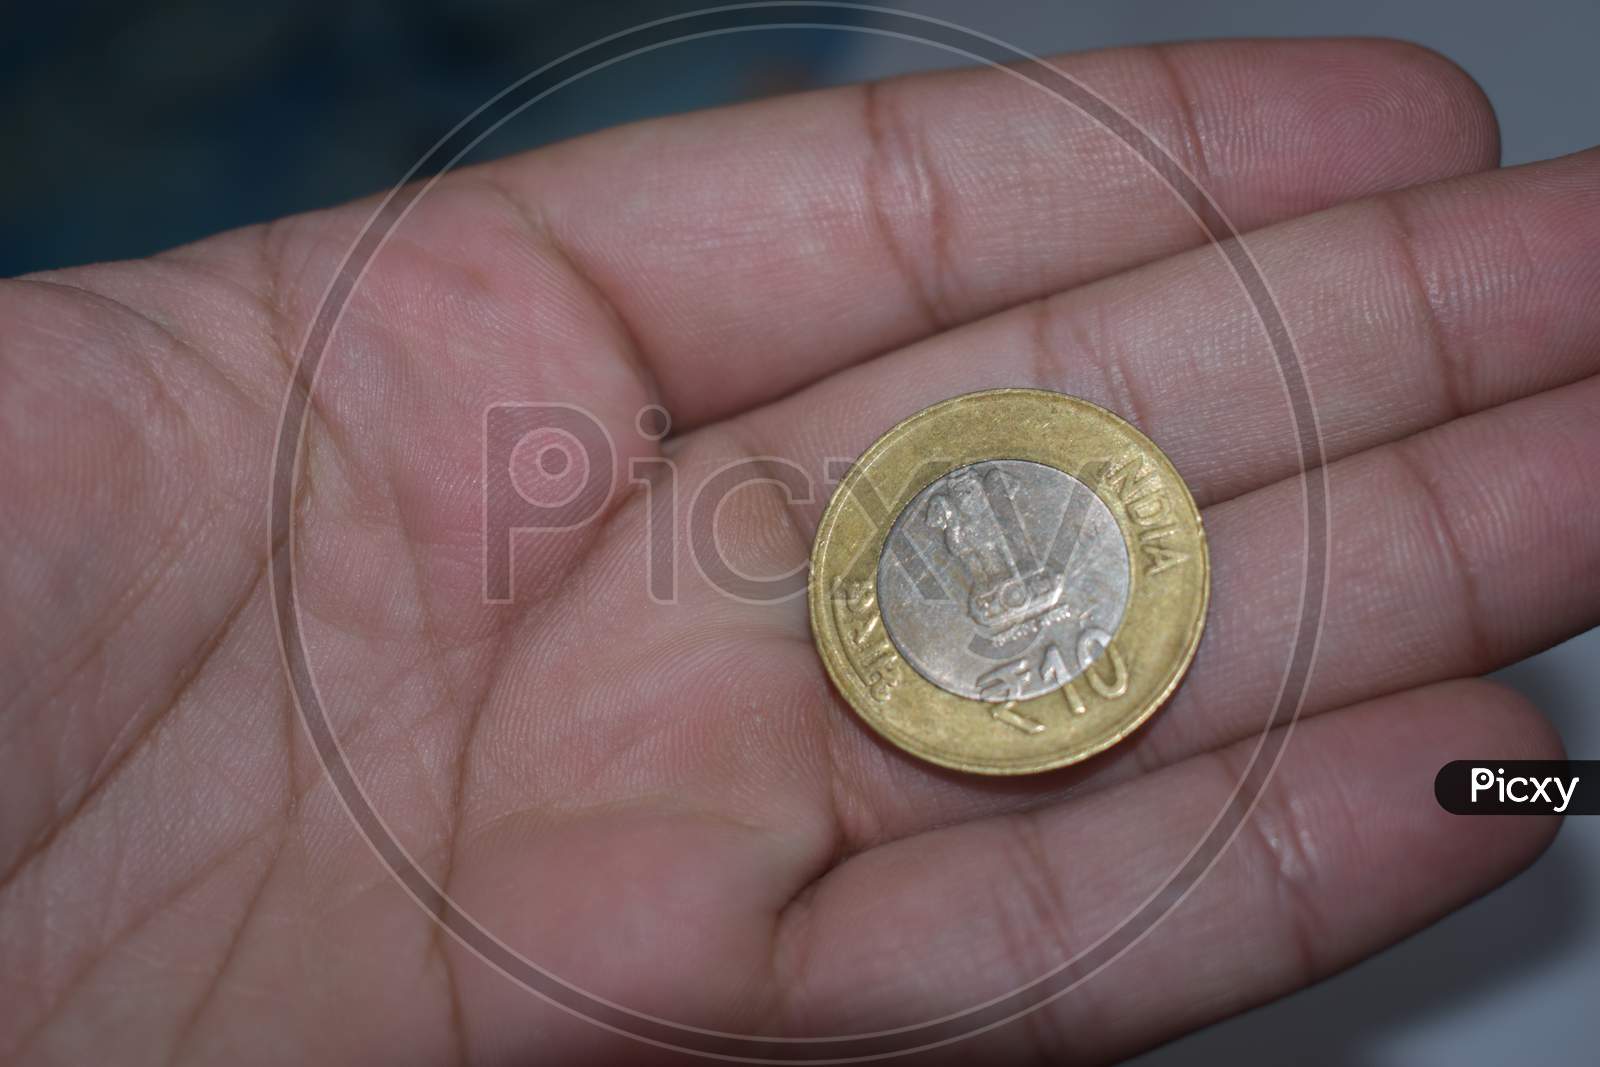 Ten rupees coin in hand